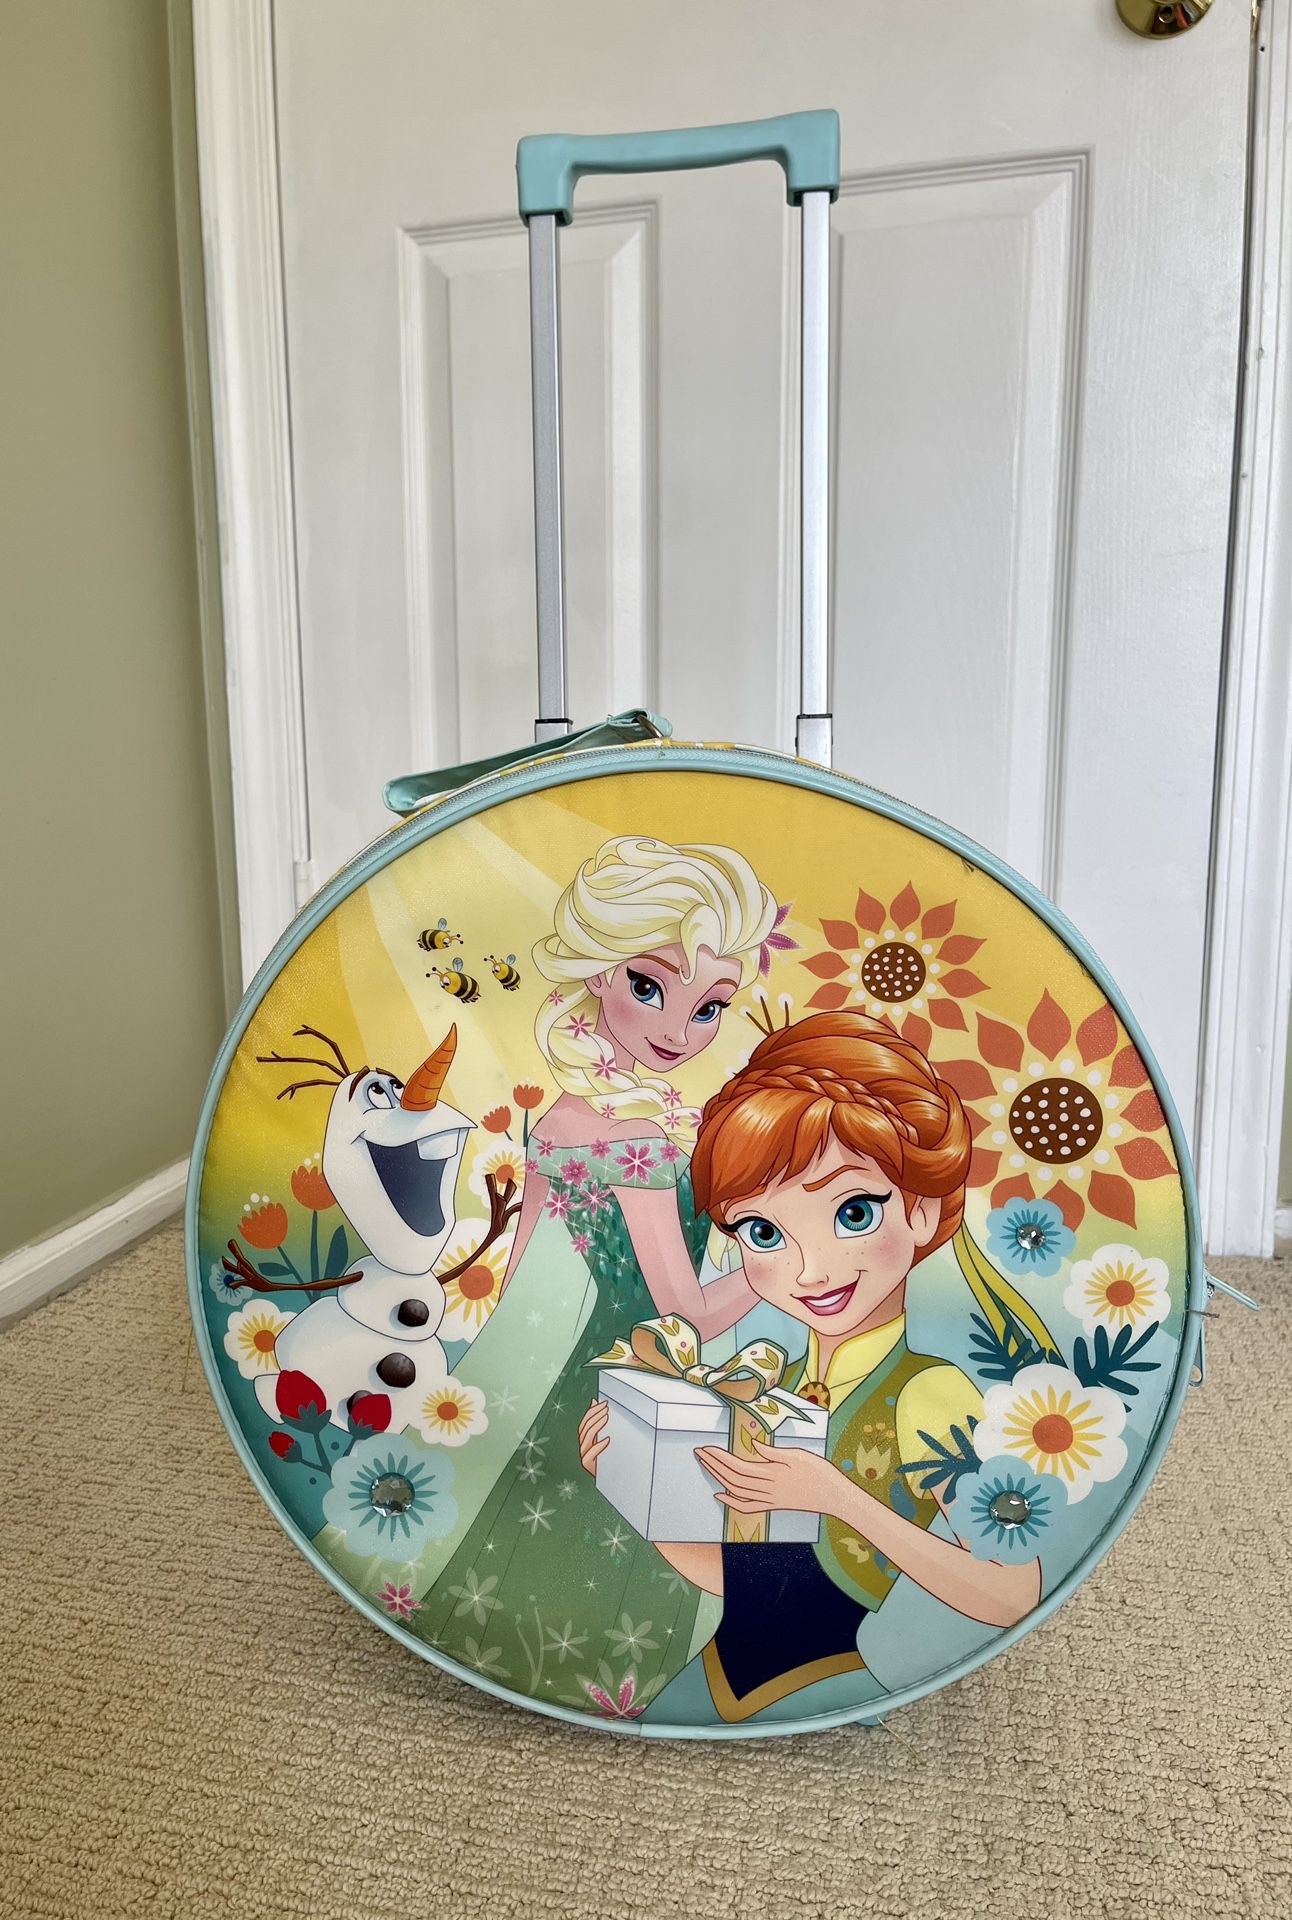 Disney Frozen Elsa & Anna round carry on bag - $60 OBO